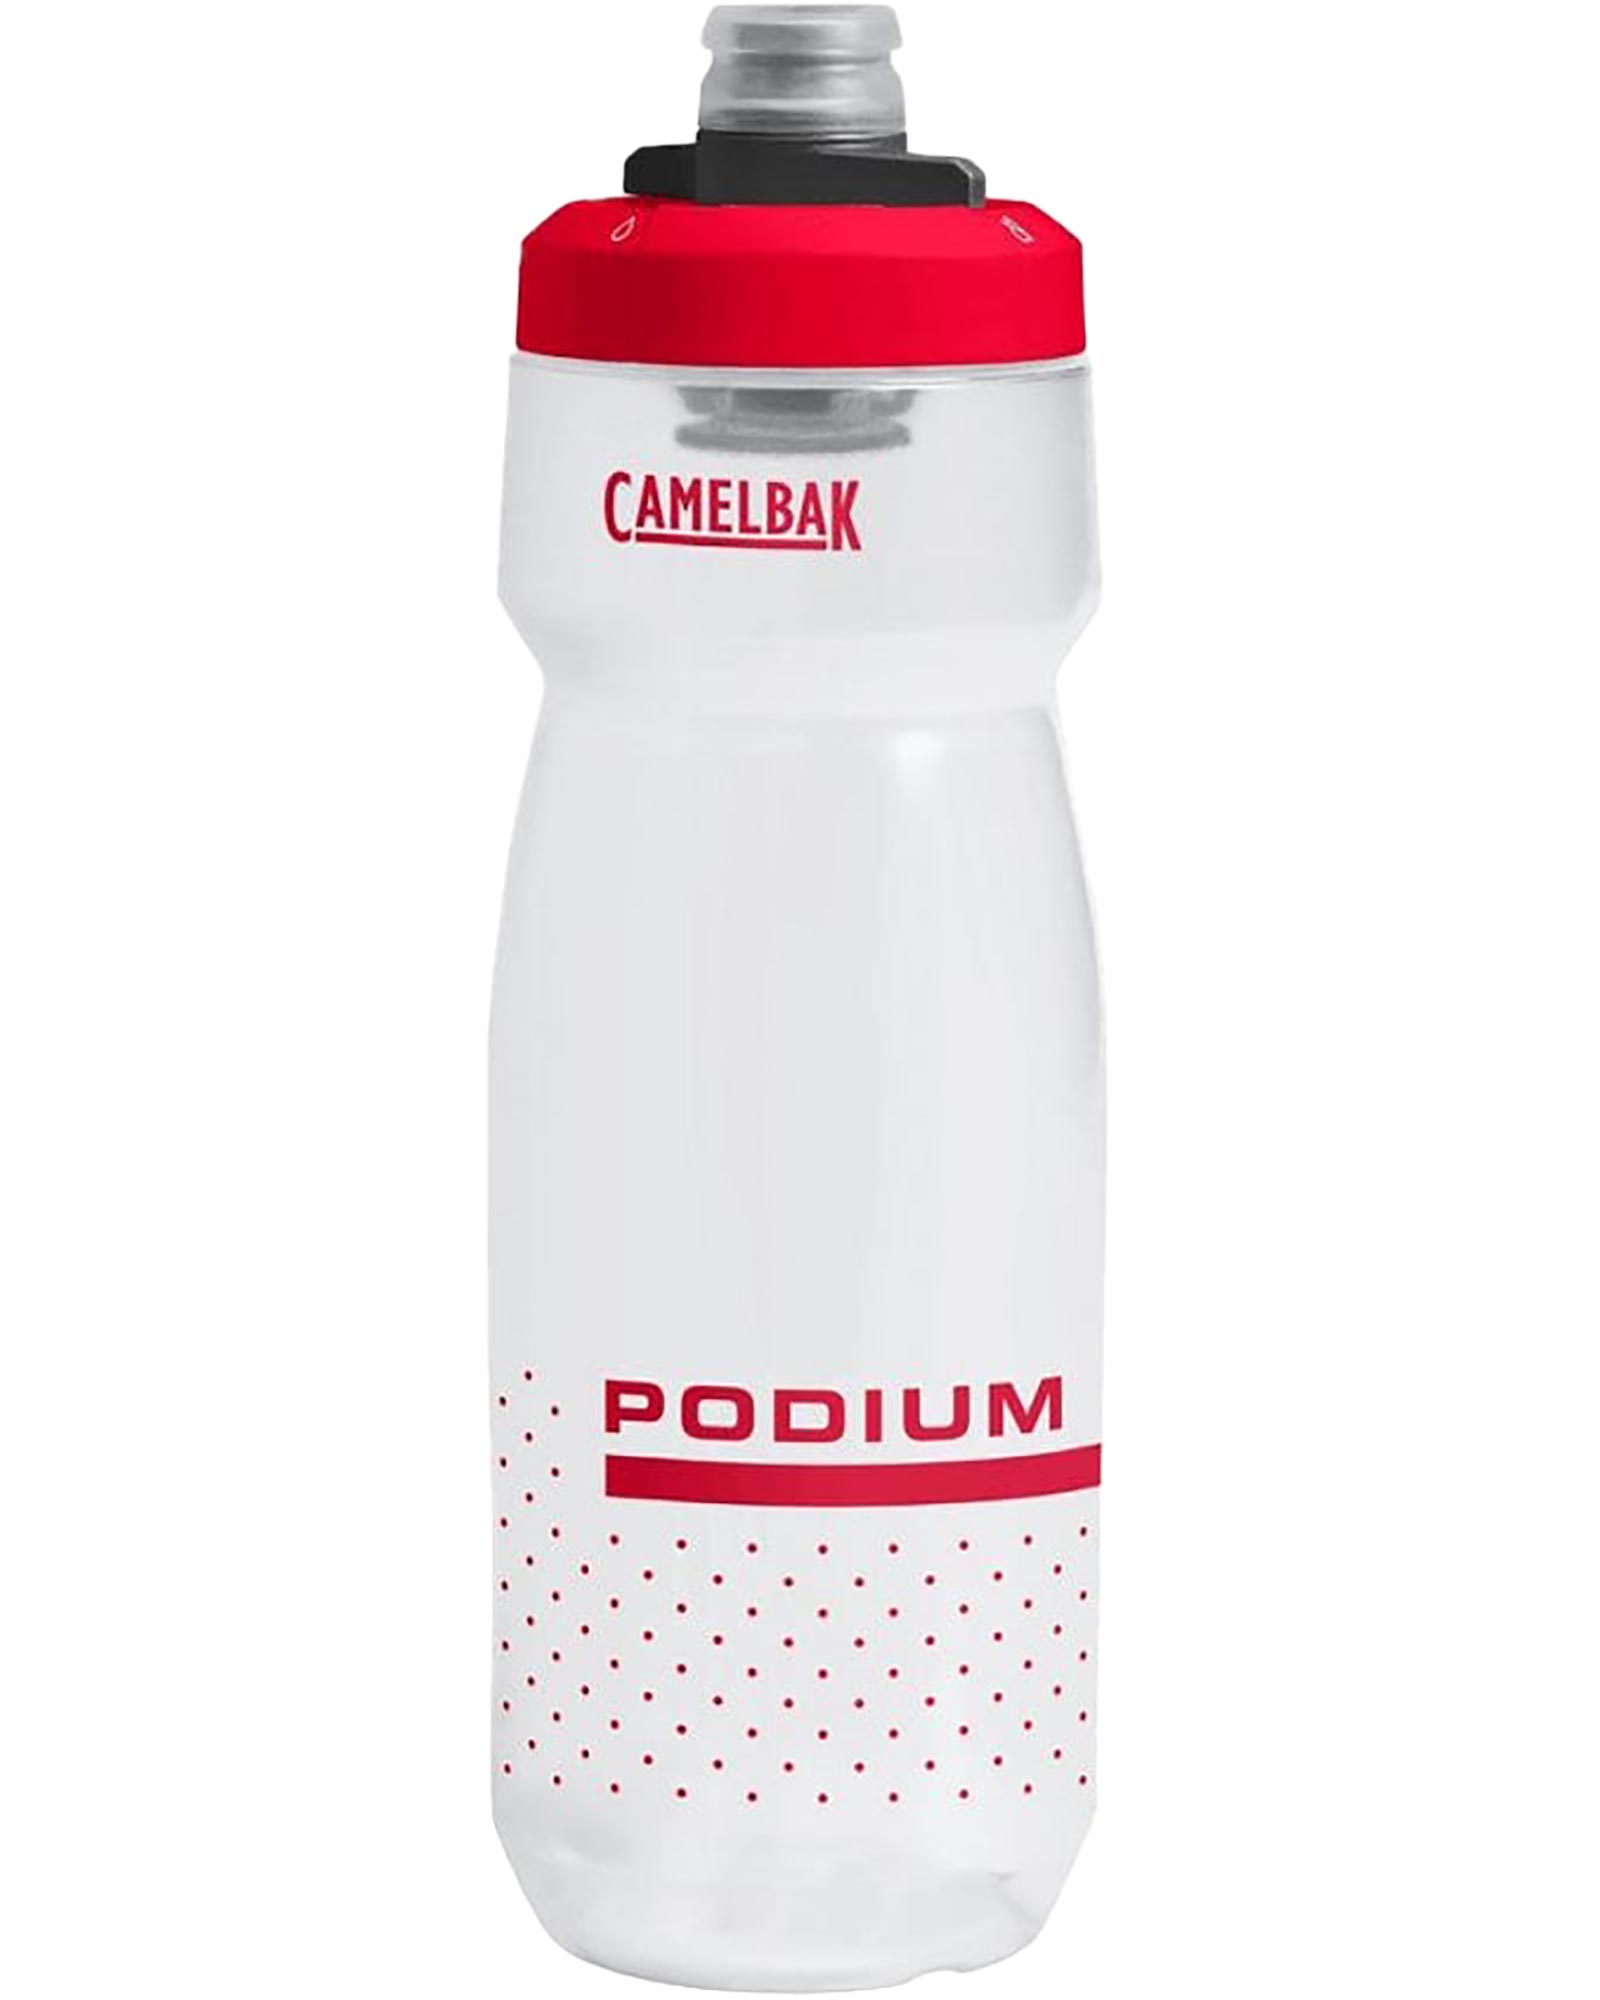 CamelBak Podium 710ml Water Bottle - Fiery Red